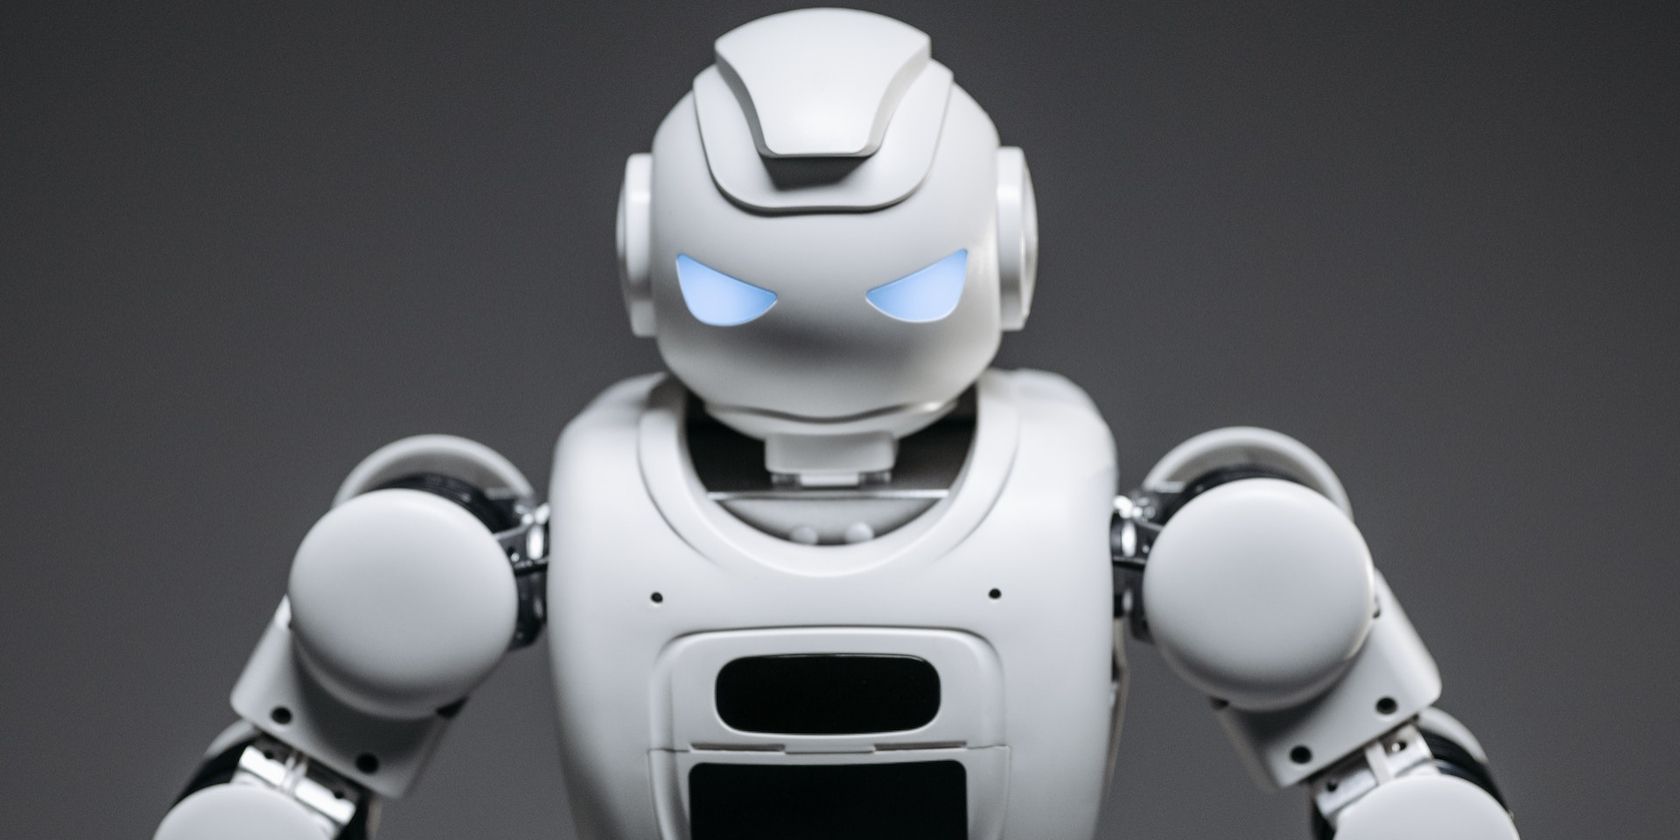 Grayscale photo of a futuristic robot